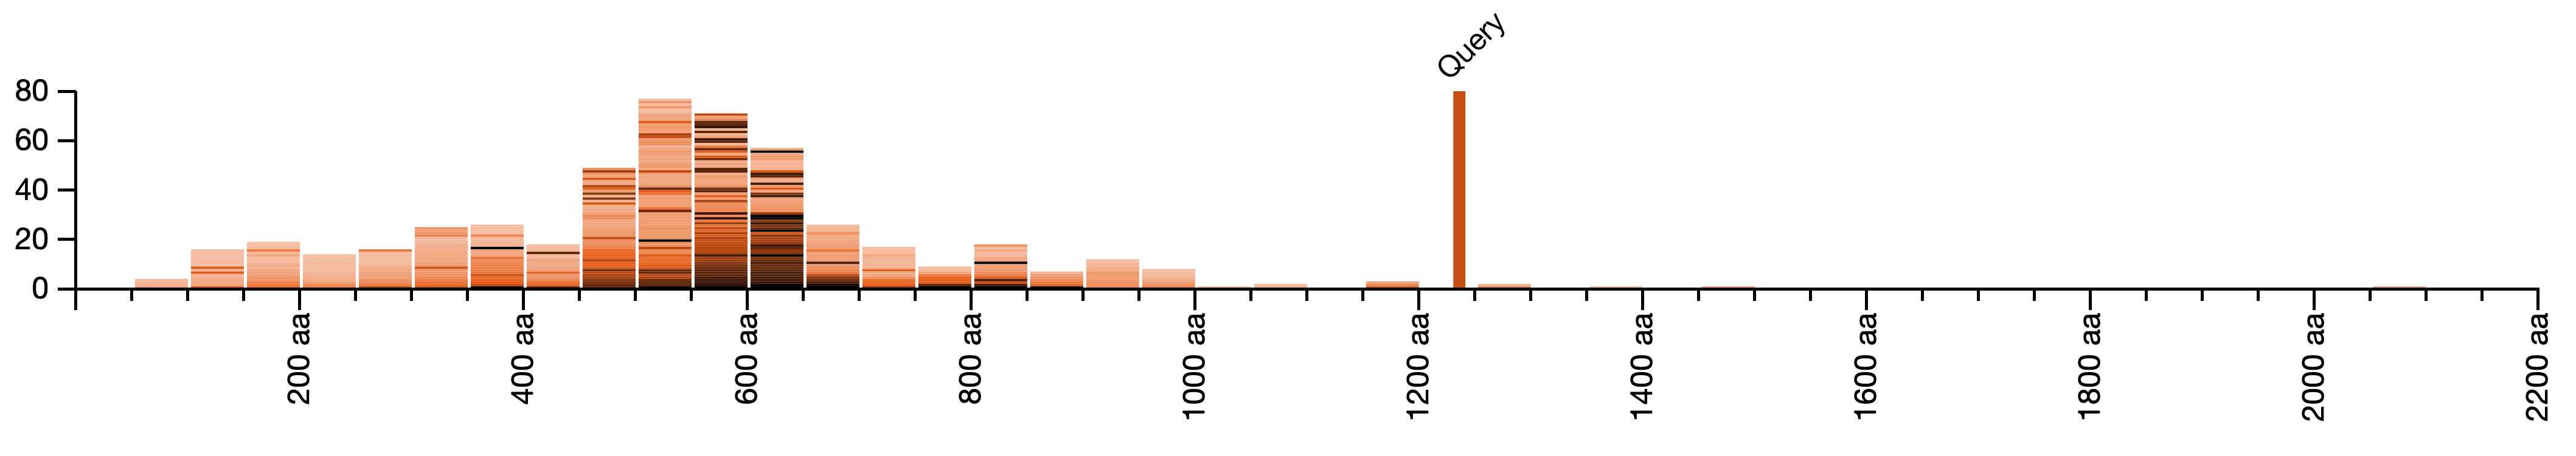 Screenshot of length distribution visualisation.